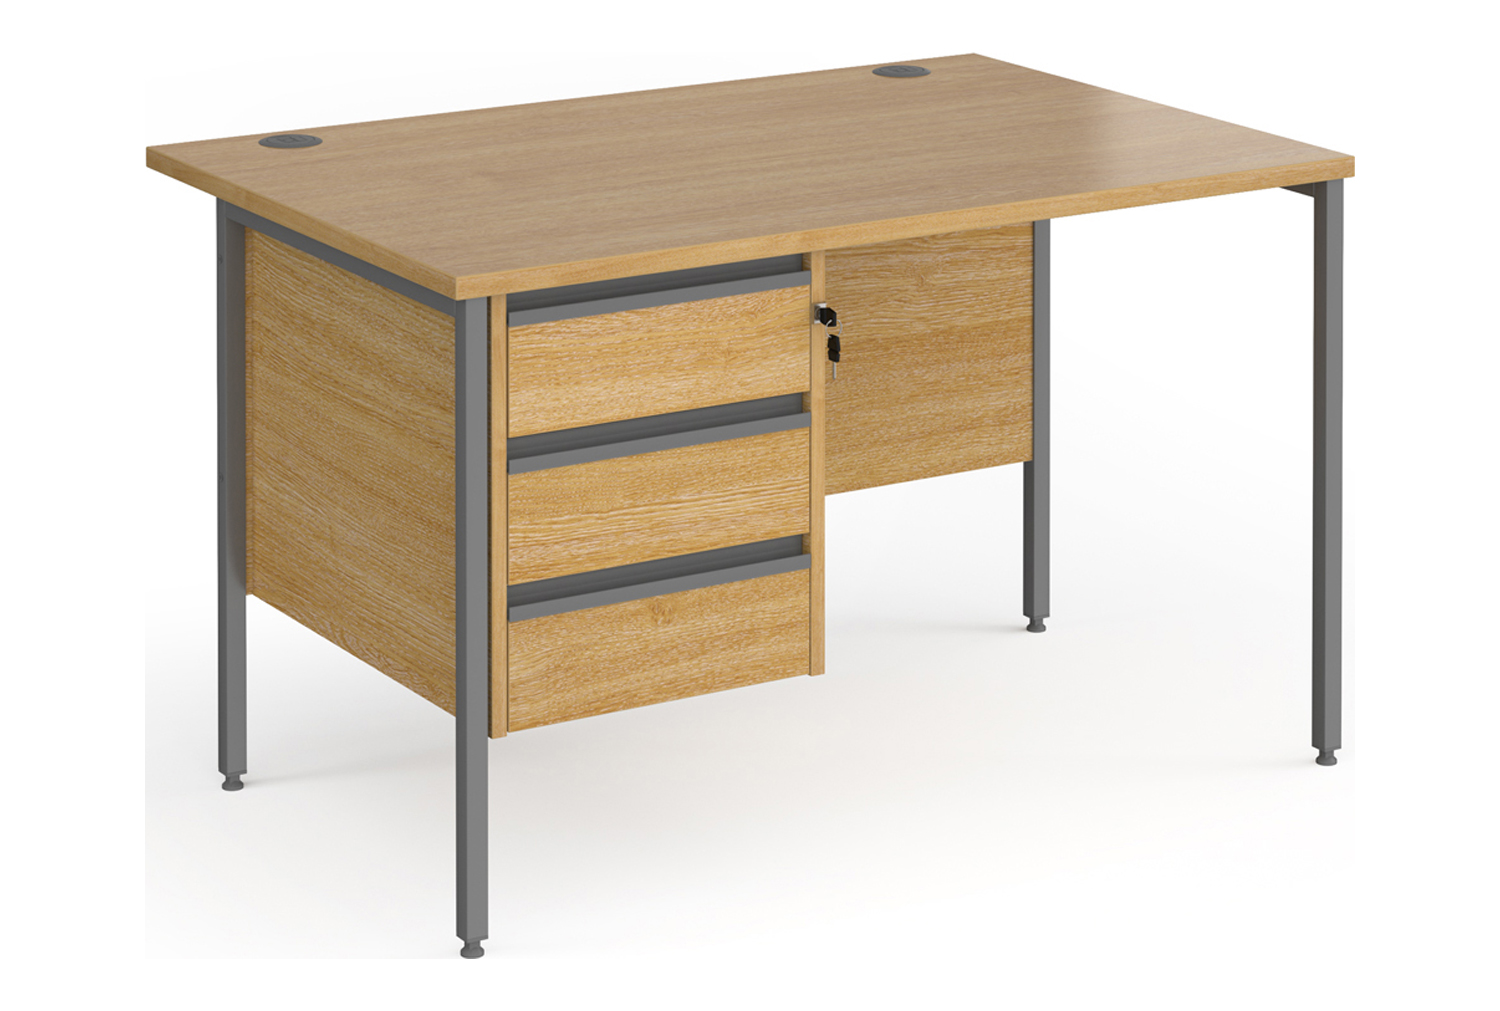 Value Line Classic+ Rectangular H-Leg Office Desk 3 Drawers (Graphite Leg), 120wx80dx73h (cm), Oak, Express Delivery